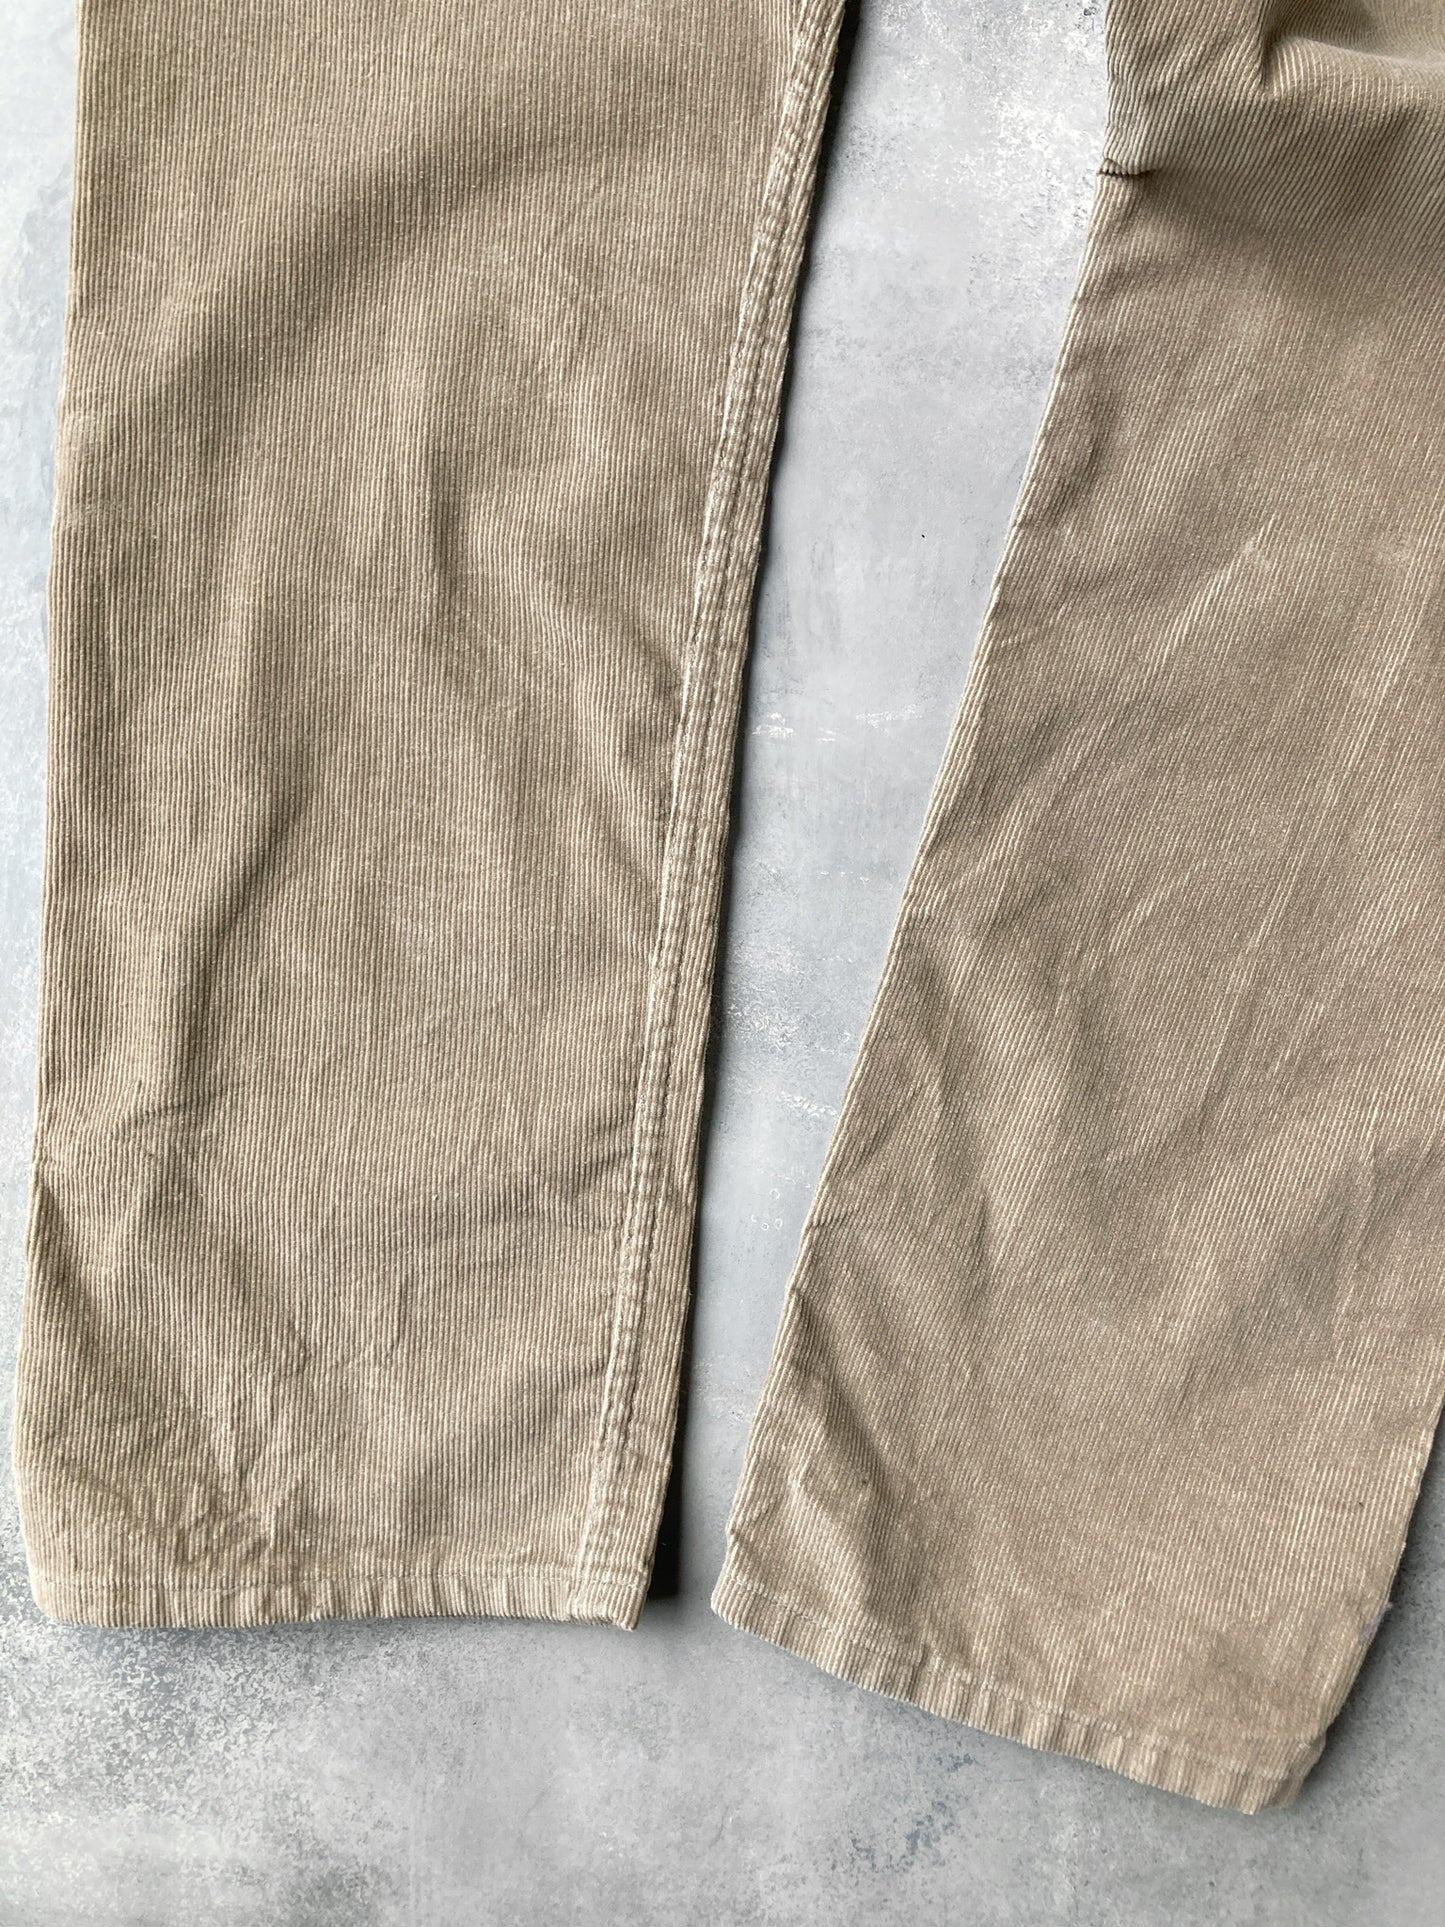 Levi's 505 Corduroy Pants '00 - 35 x 34